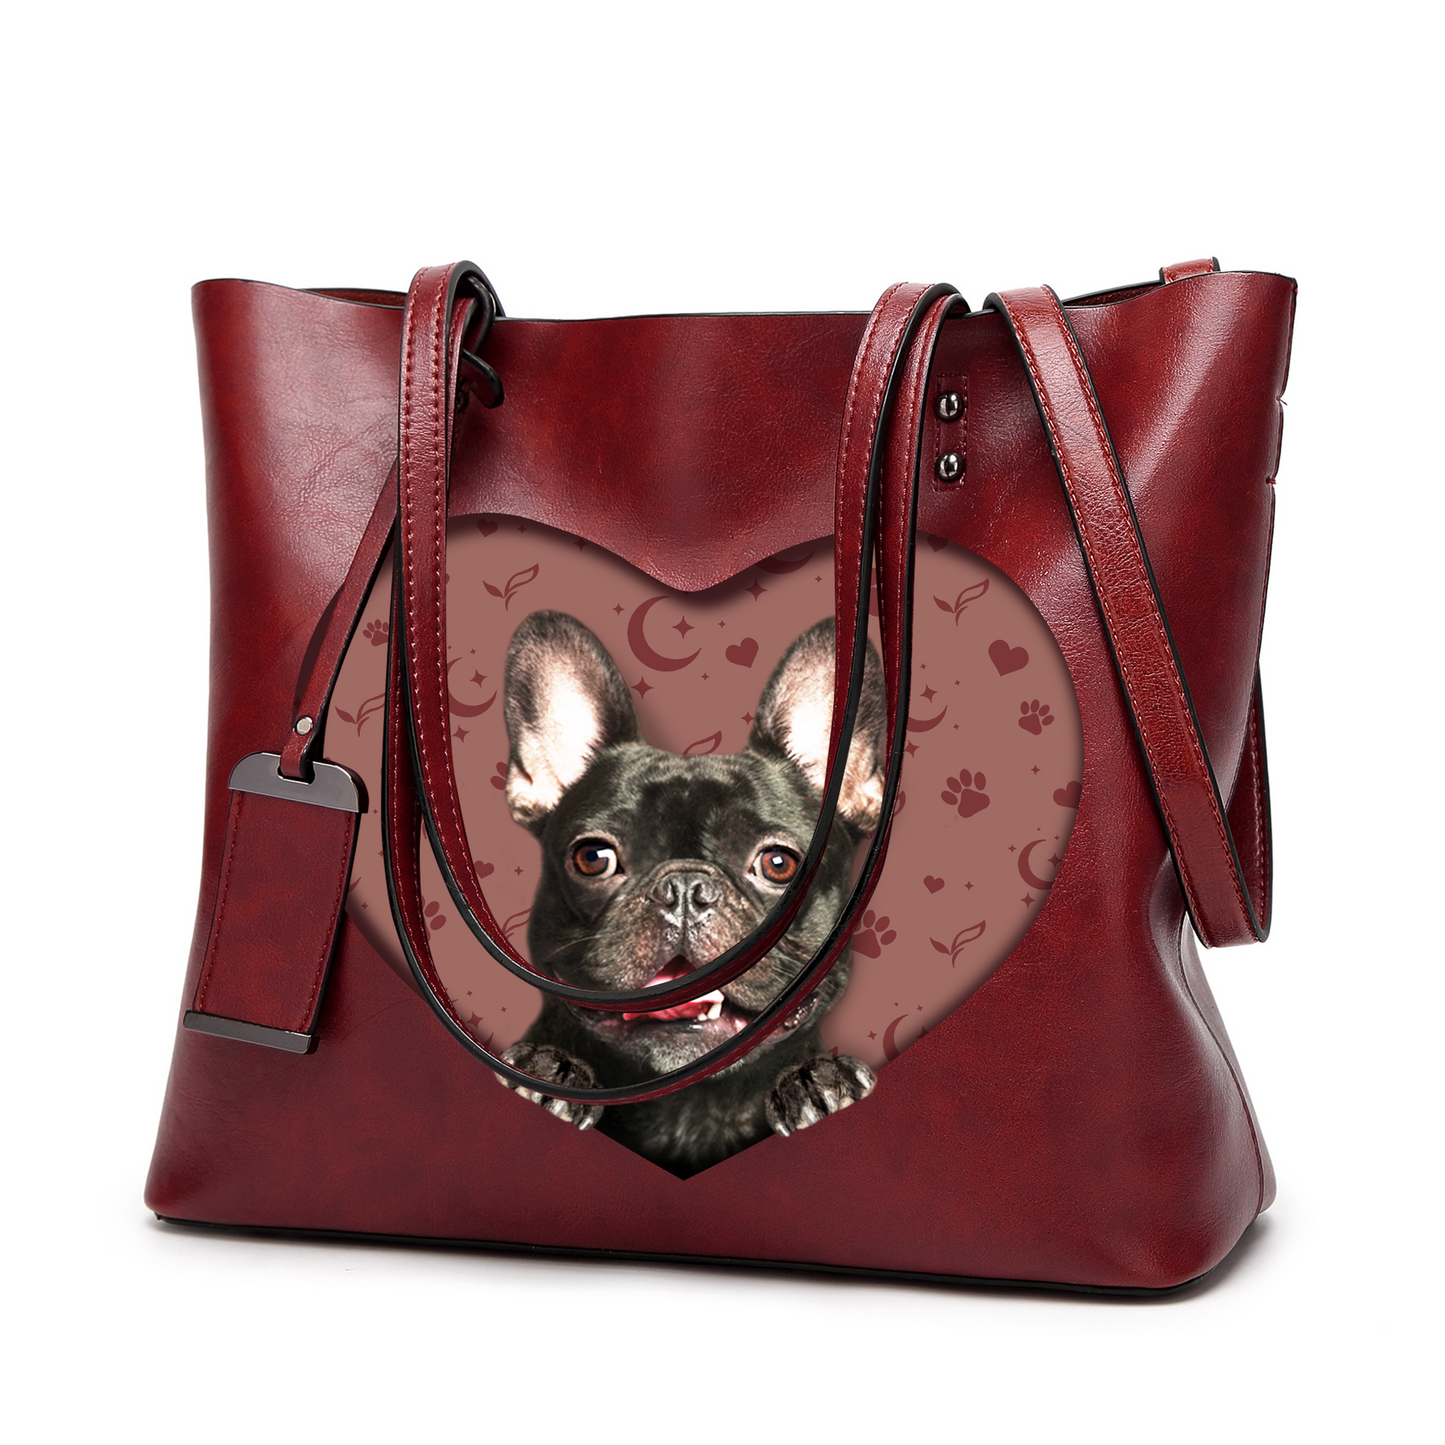 I Know I'm Cute - French Bulldog Glamour Handbag V2 - 7